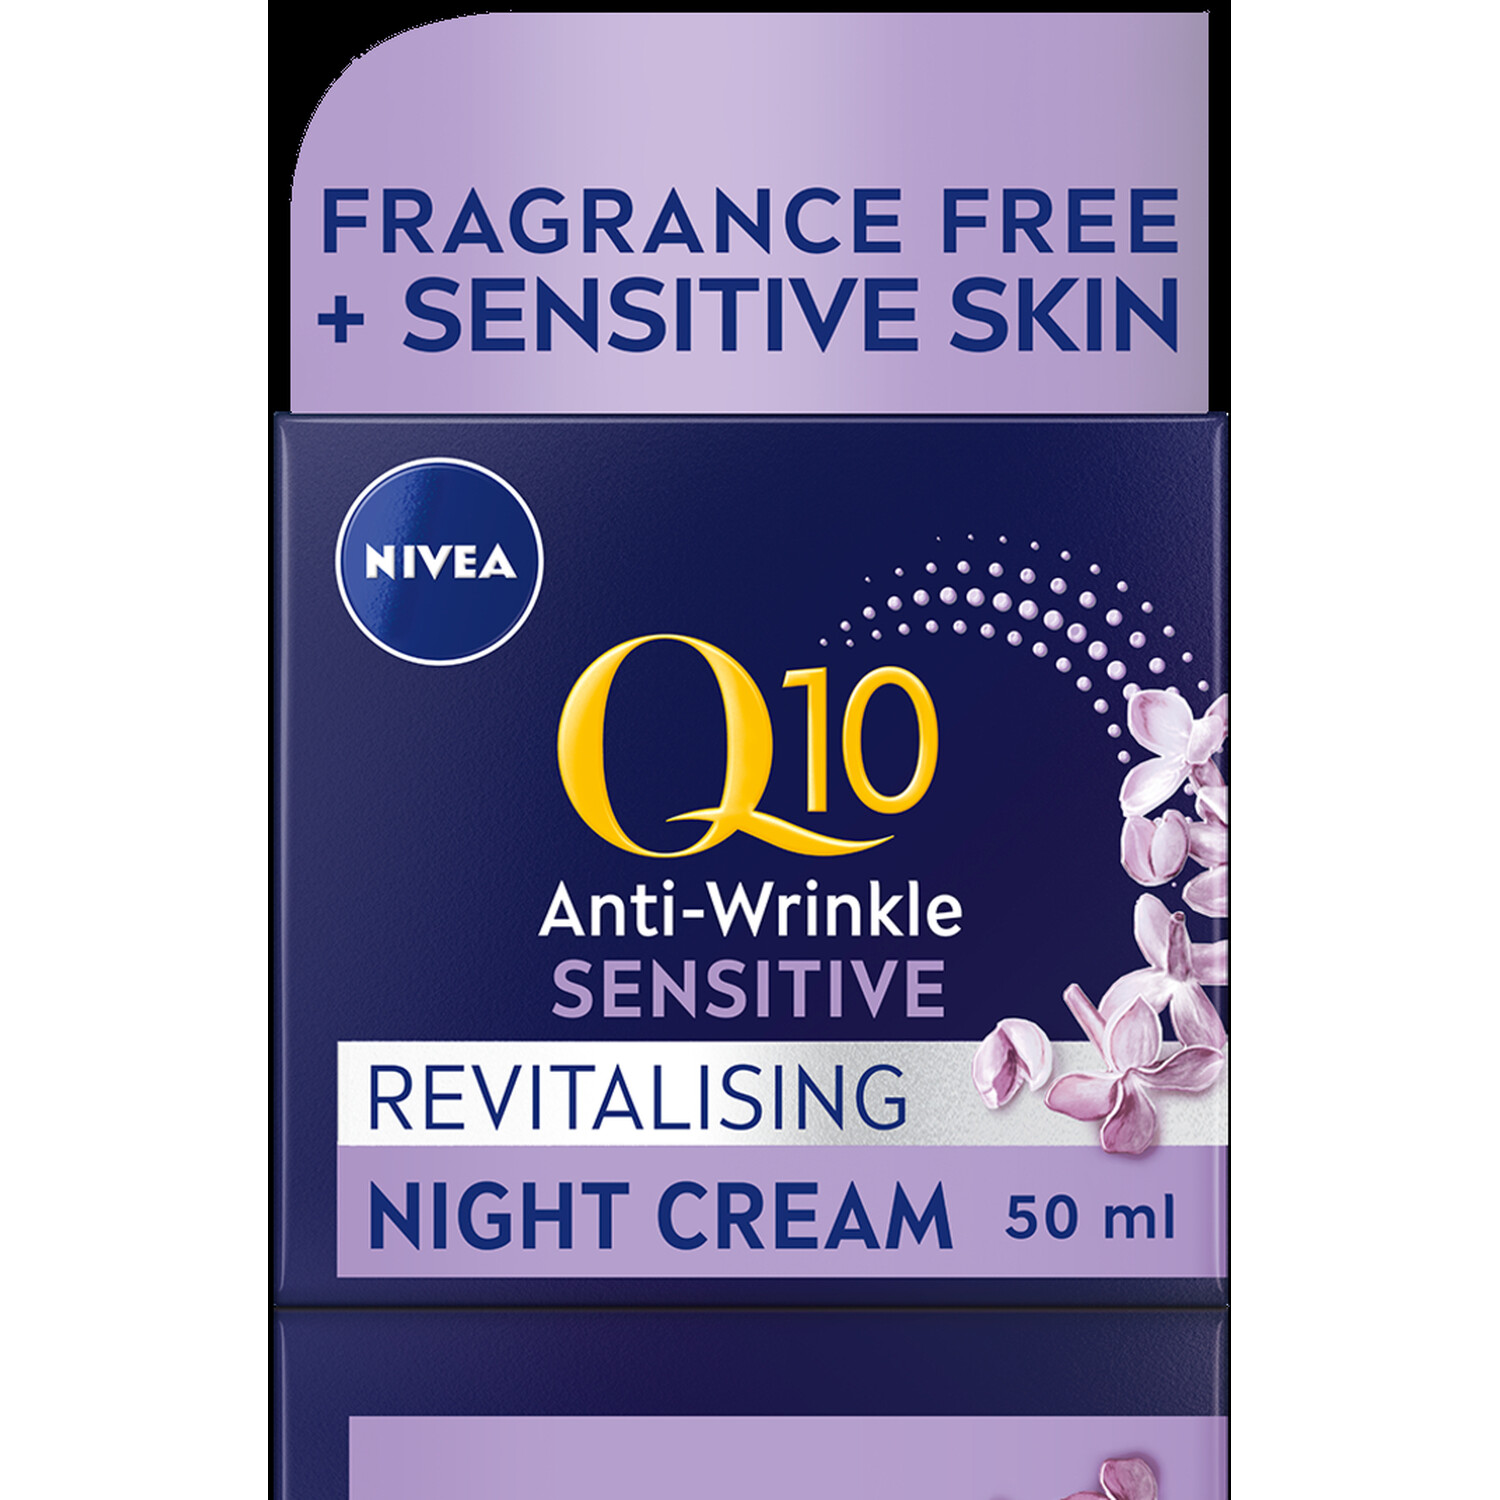 NIVEA Q10 Sensitive Anti-Wrinkle Revitalising Night Cream 50ml - Blue Image